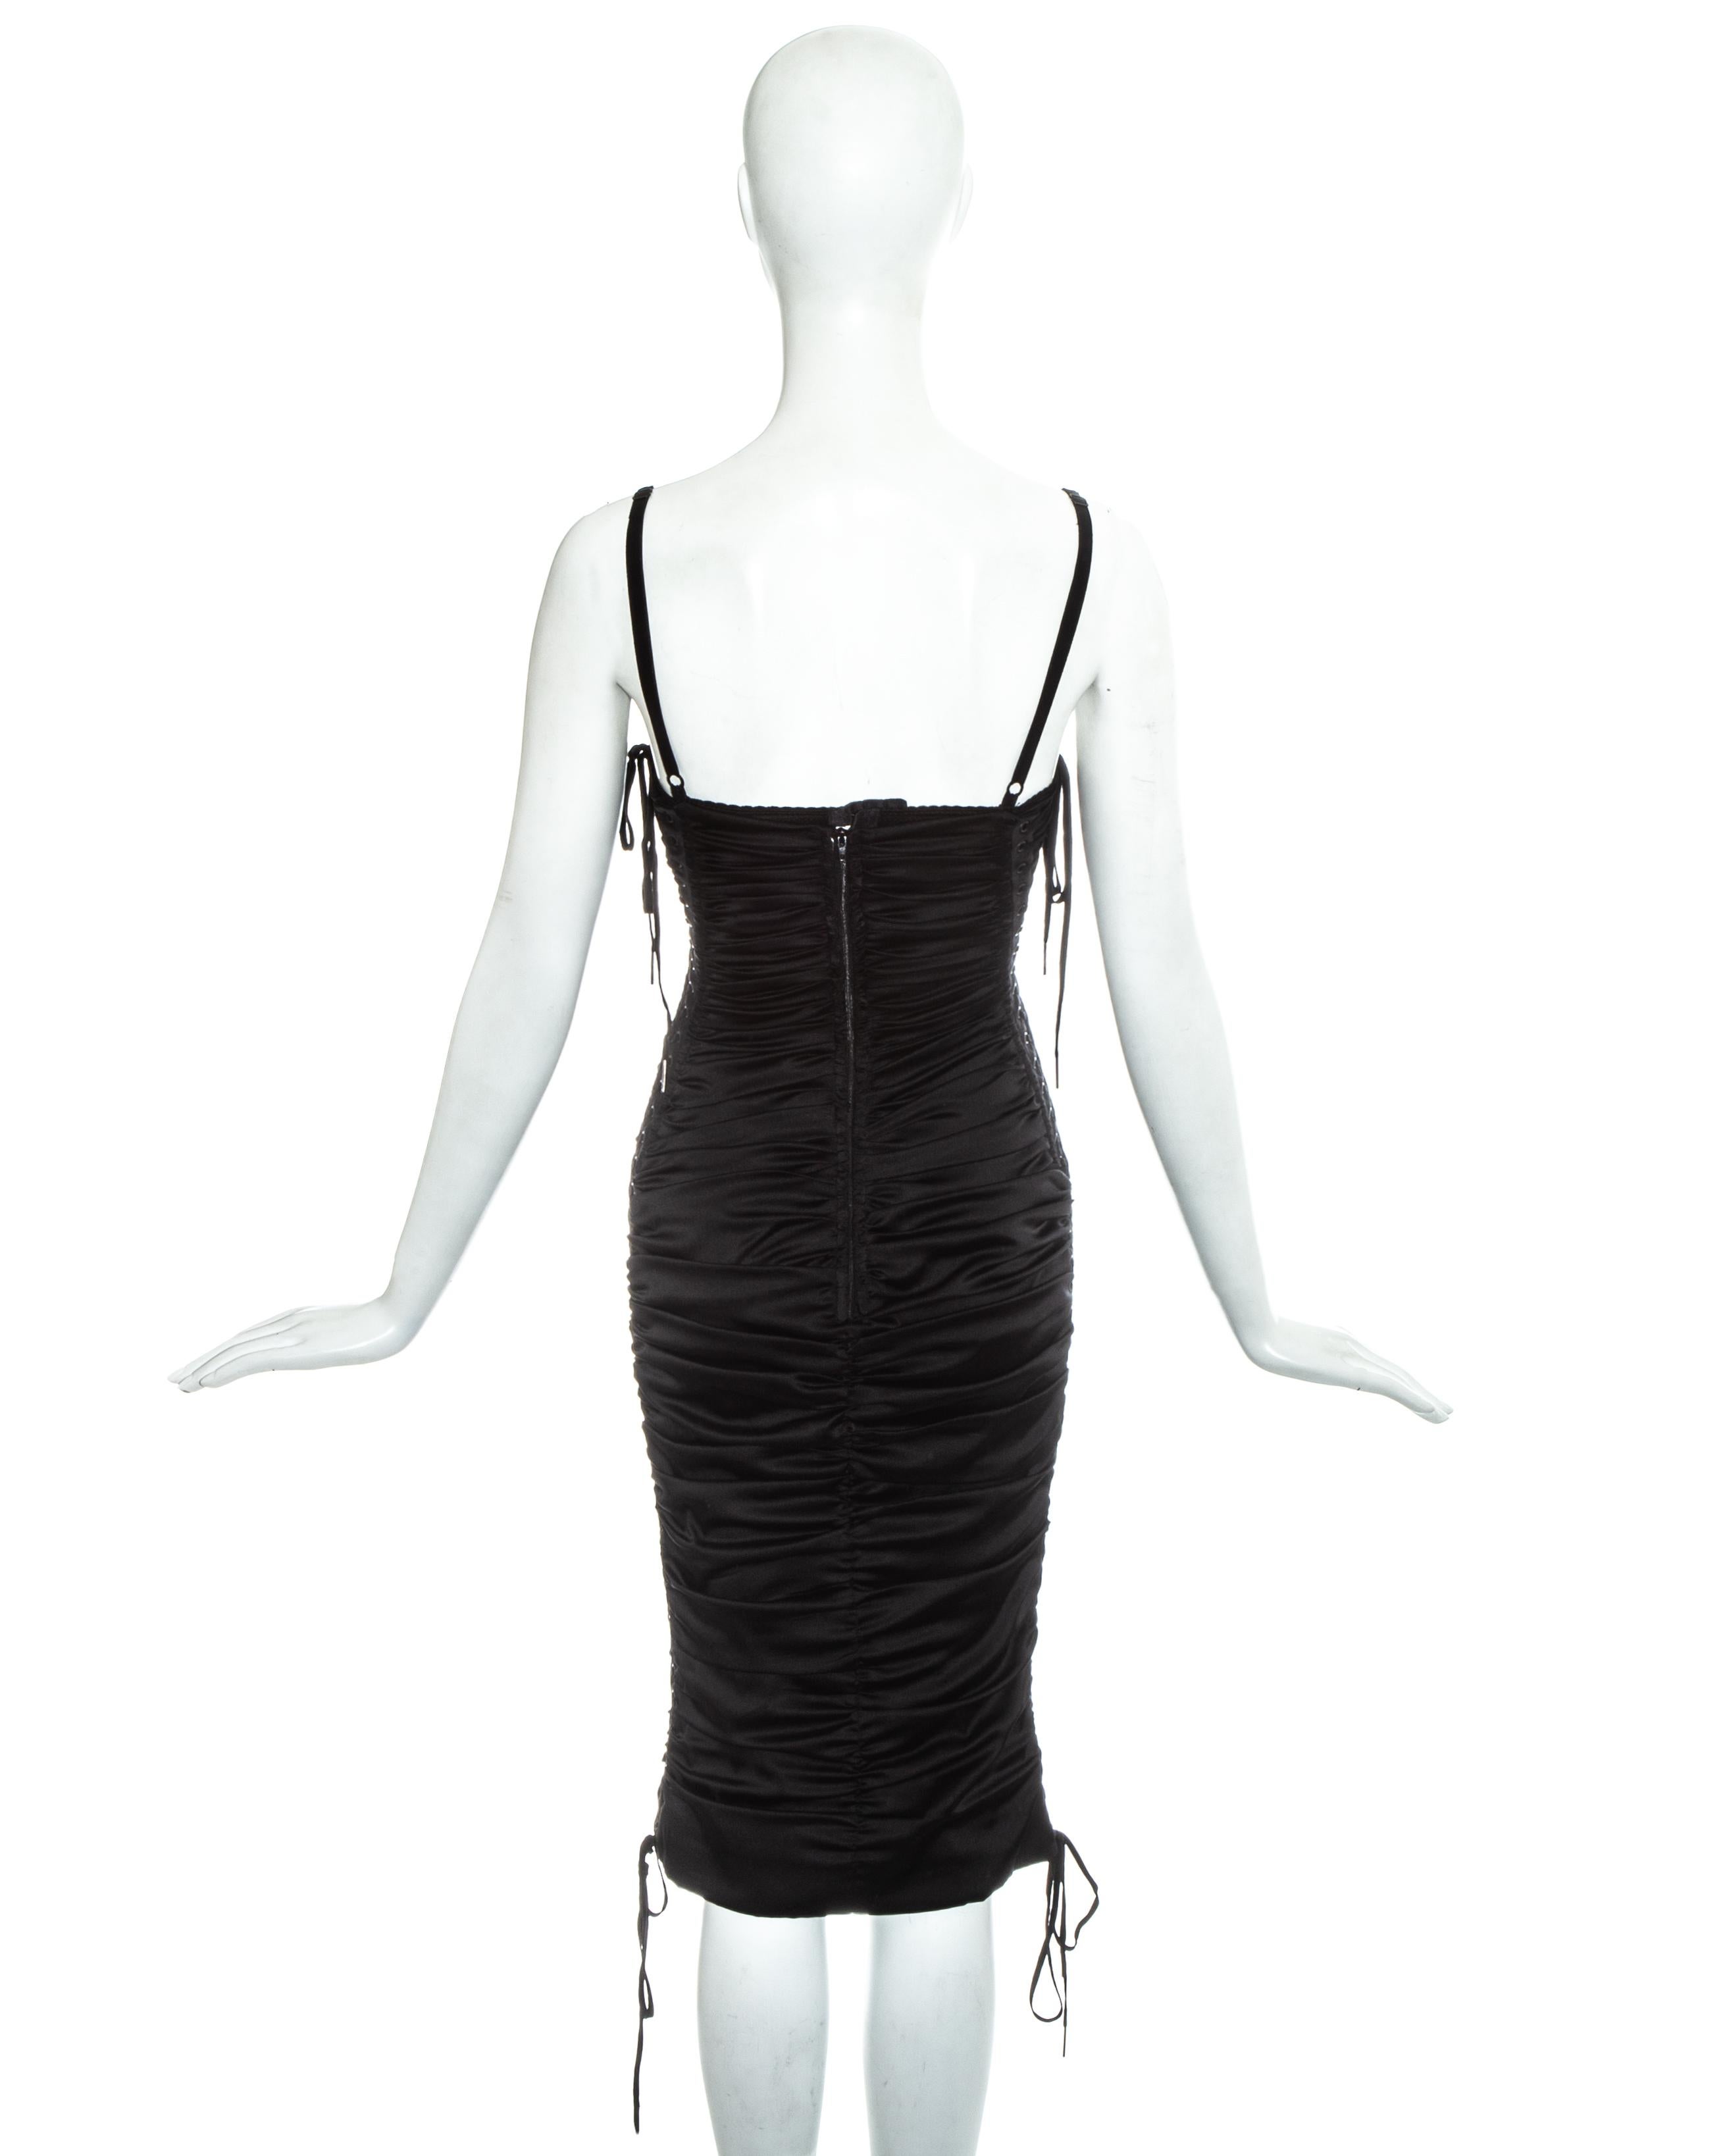 Women's Dolce & Gabbana black ruched silk figure hugging lace up dress, ss 2003